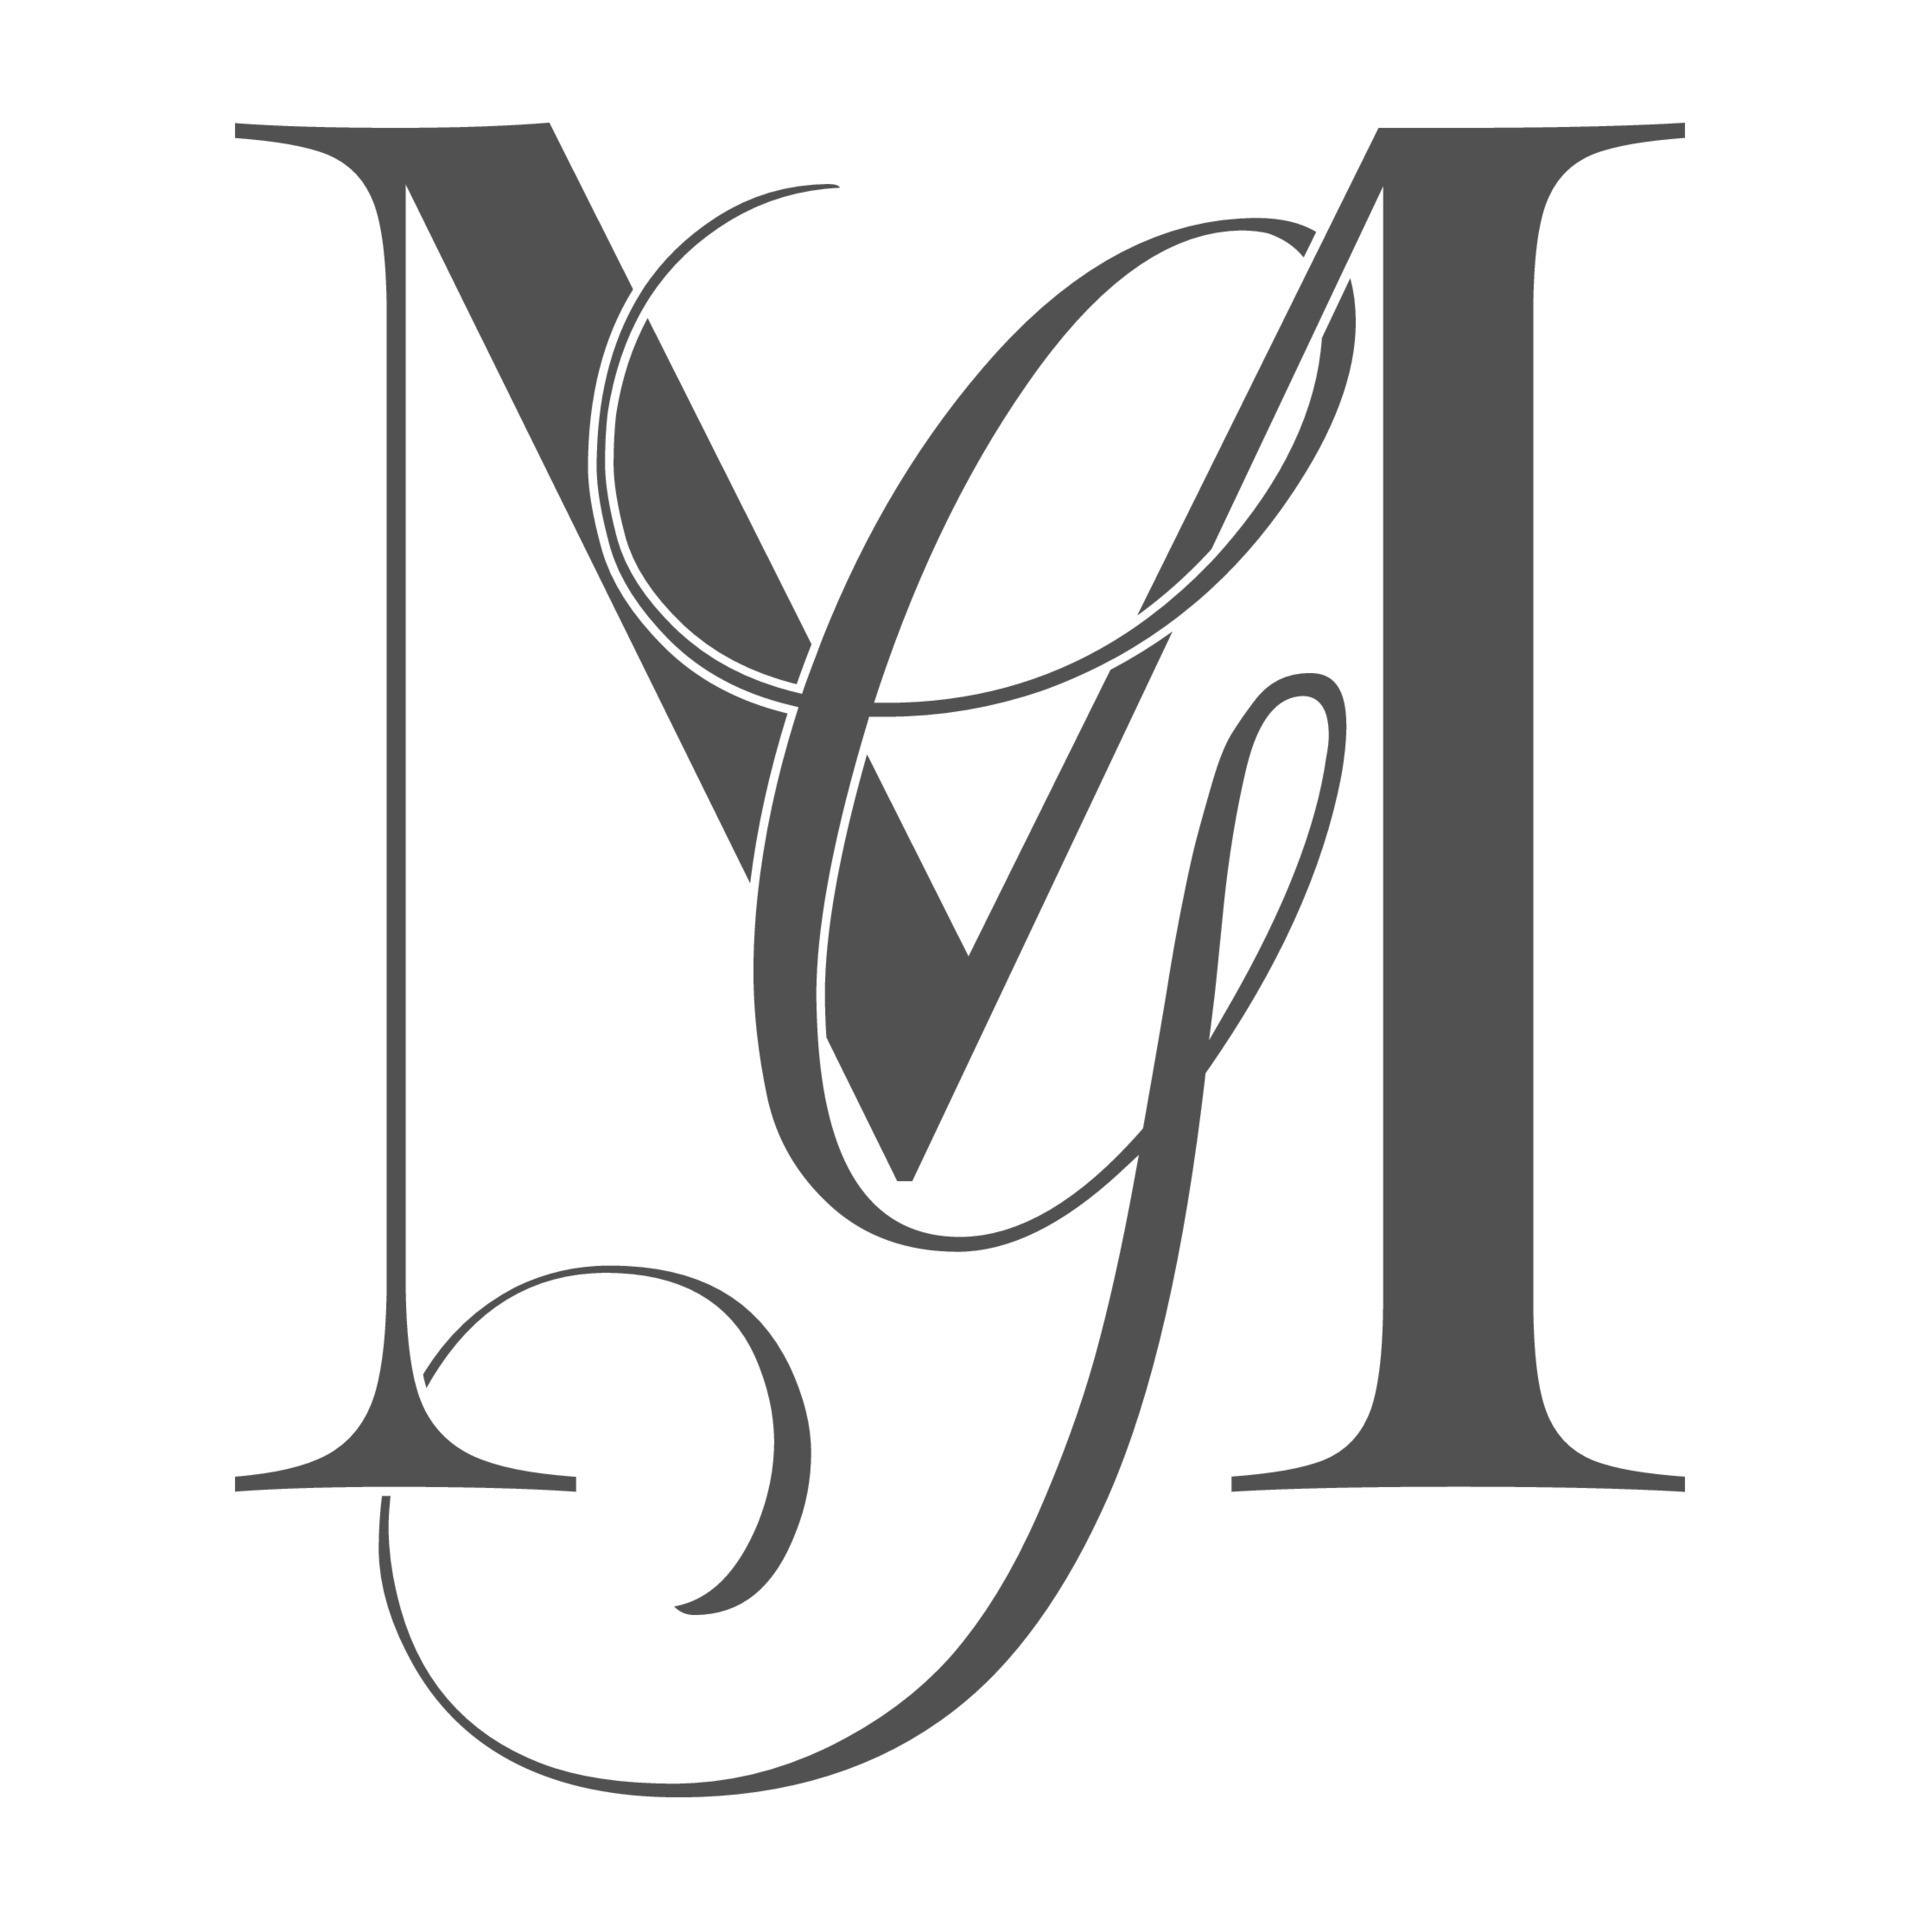 mg ,gm, monogram logo. Calligraphic signature icon. Wedding Logo